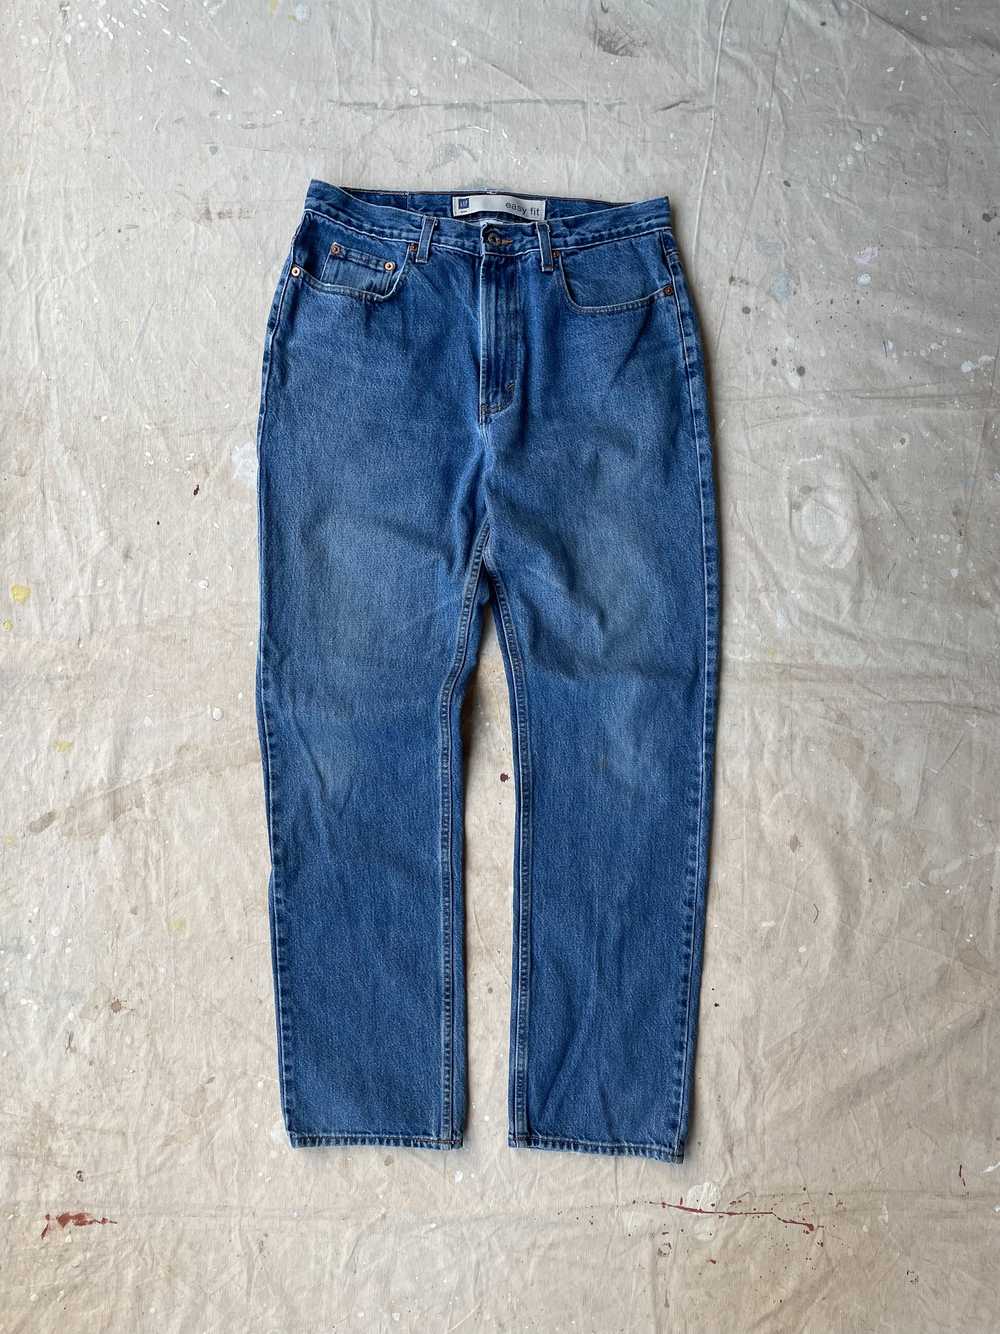 GAP Medium Wash Blue Jeans—[32x33] - image 1